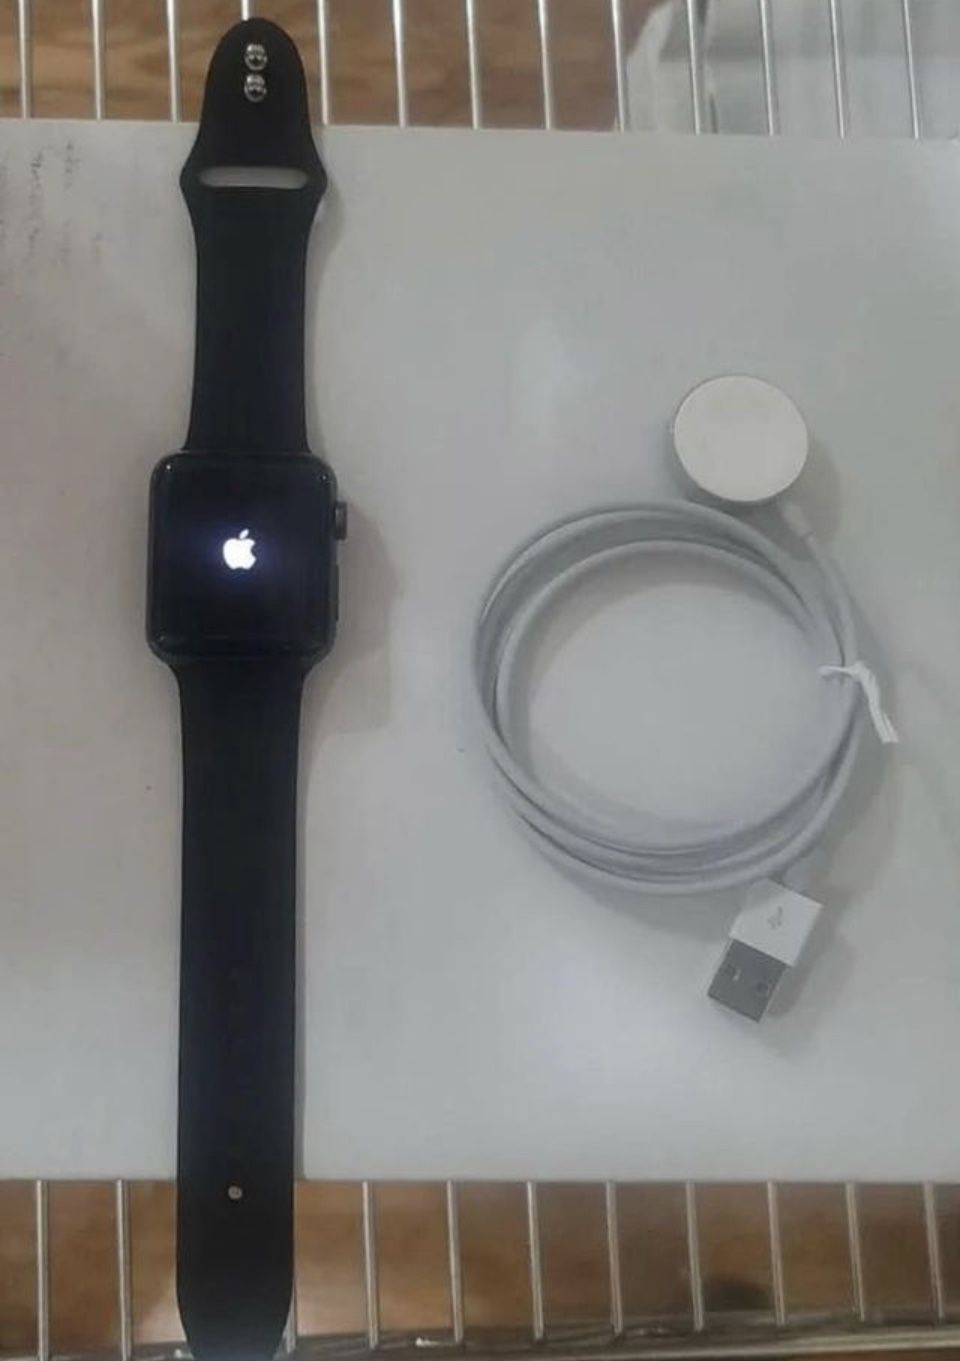 Series 2 Apple Watch